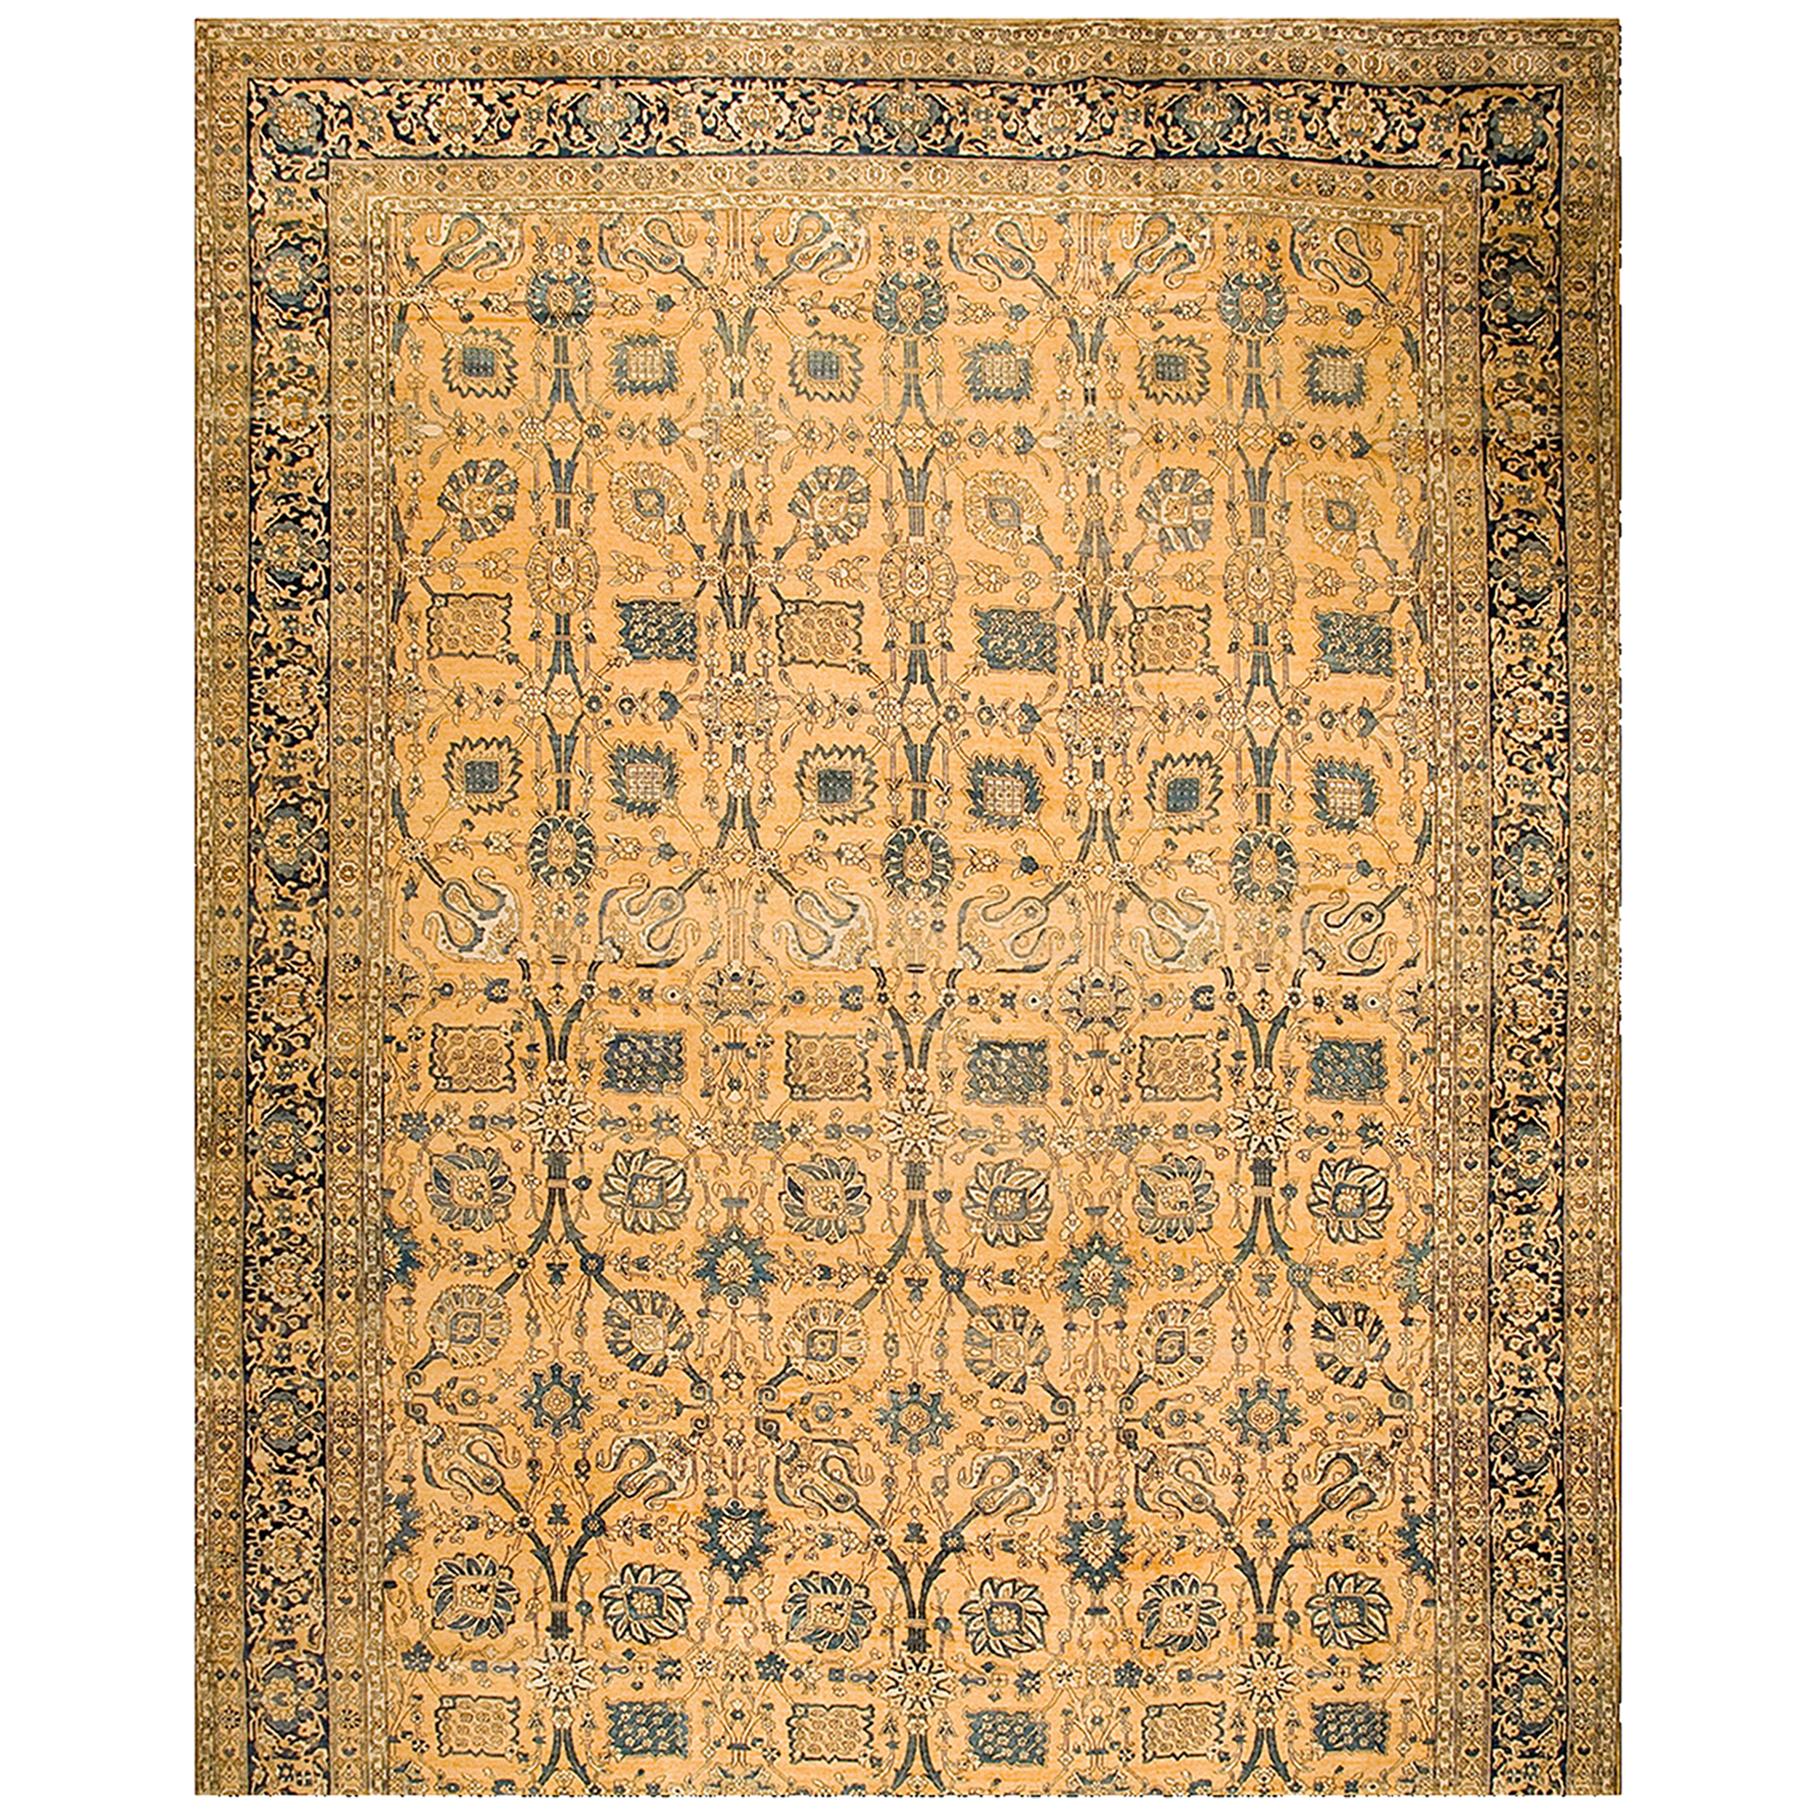 Early 20th Century Persian Kirman Carpet ( 13'3" x 22'4" - 405 x 680 )